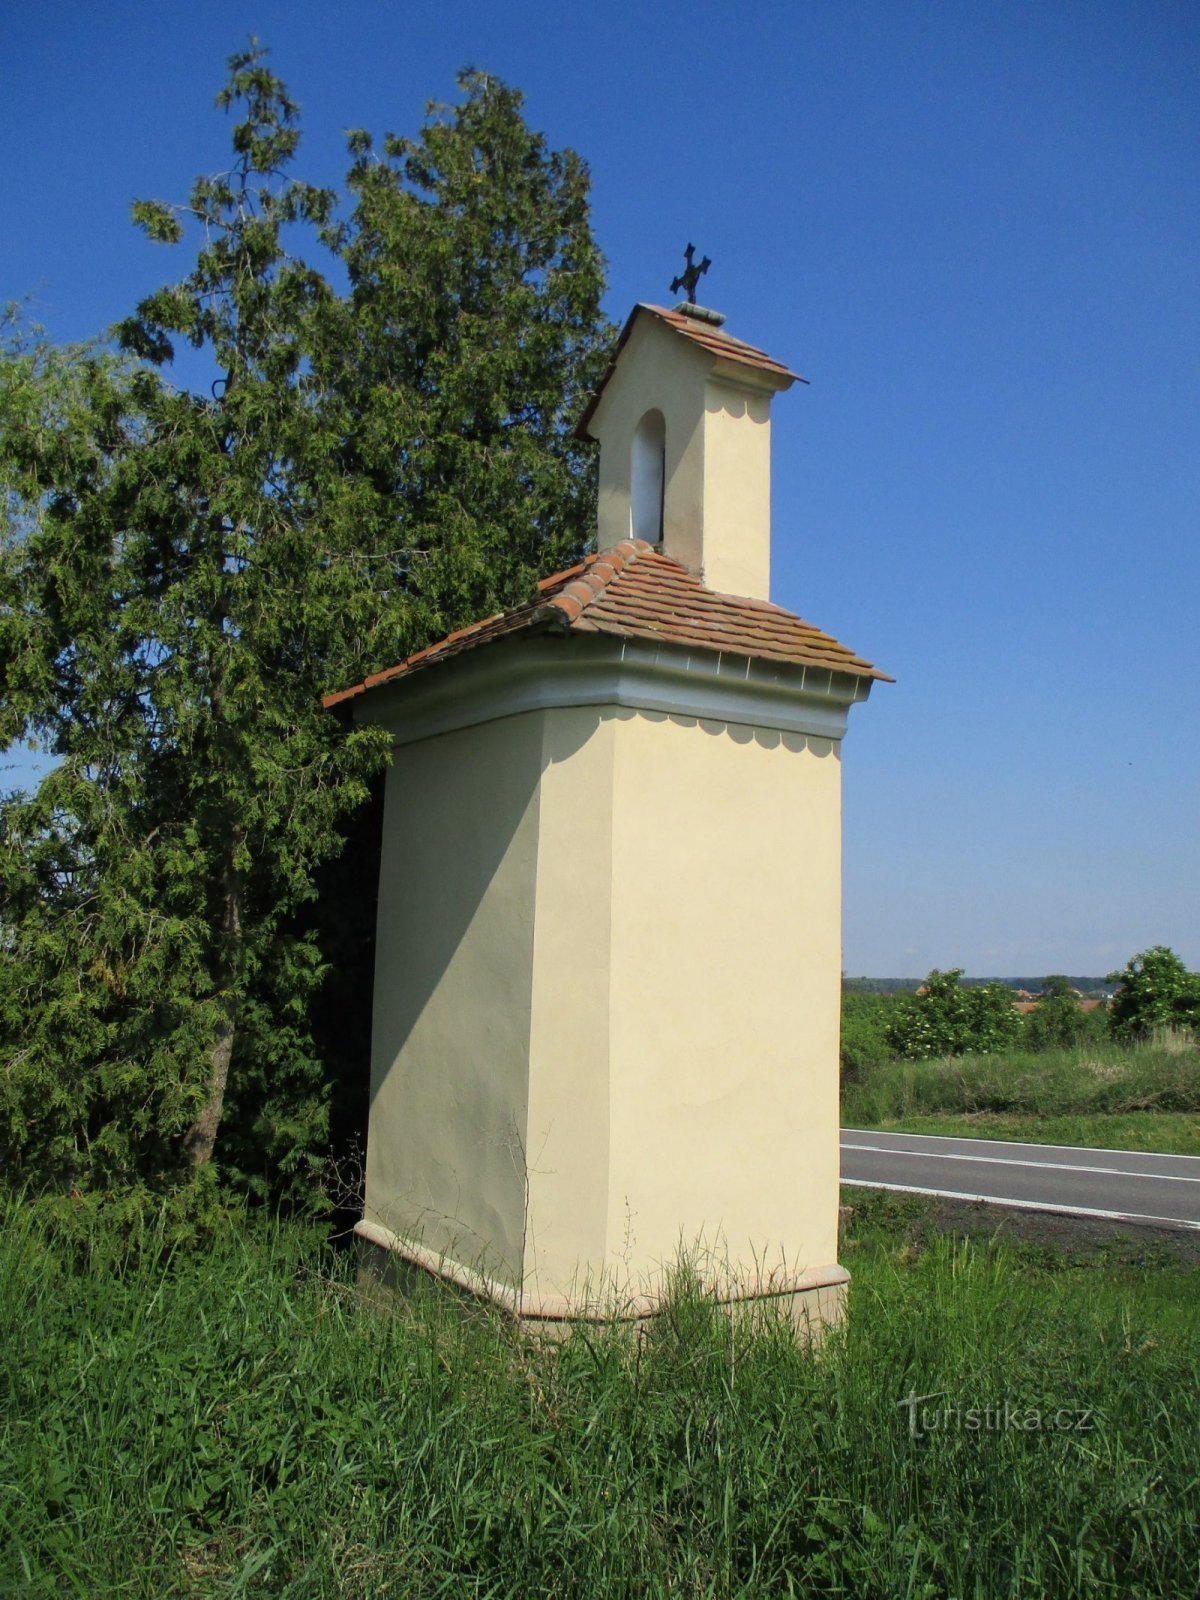 Holice 路上的小教堂（Horní Ředice，16.5.2020/XNUMX/XNUMX）